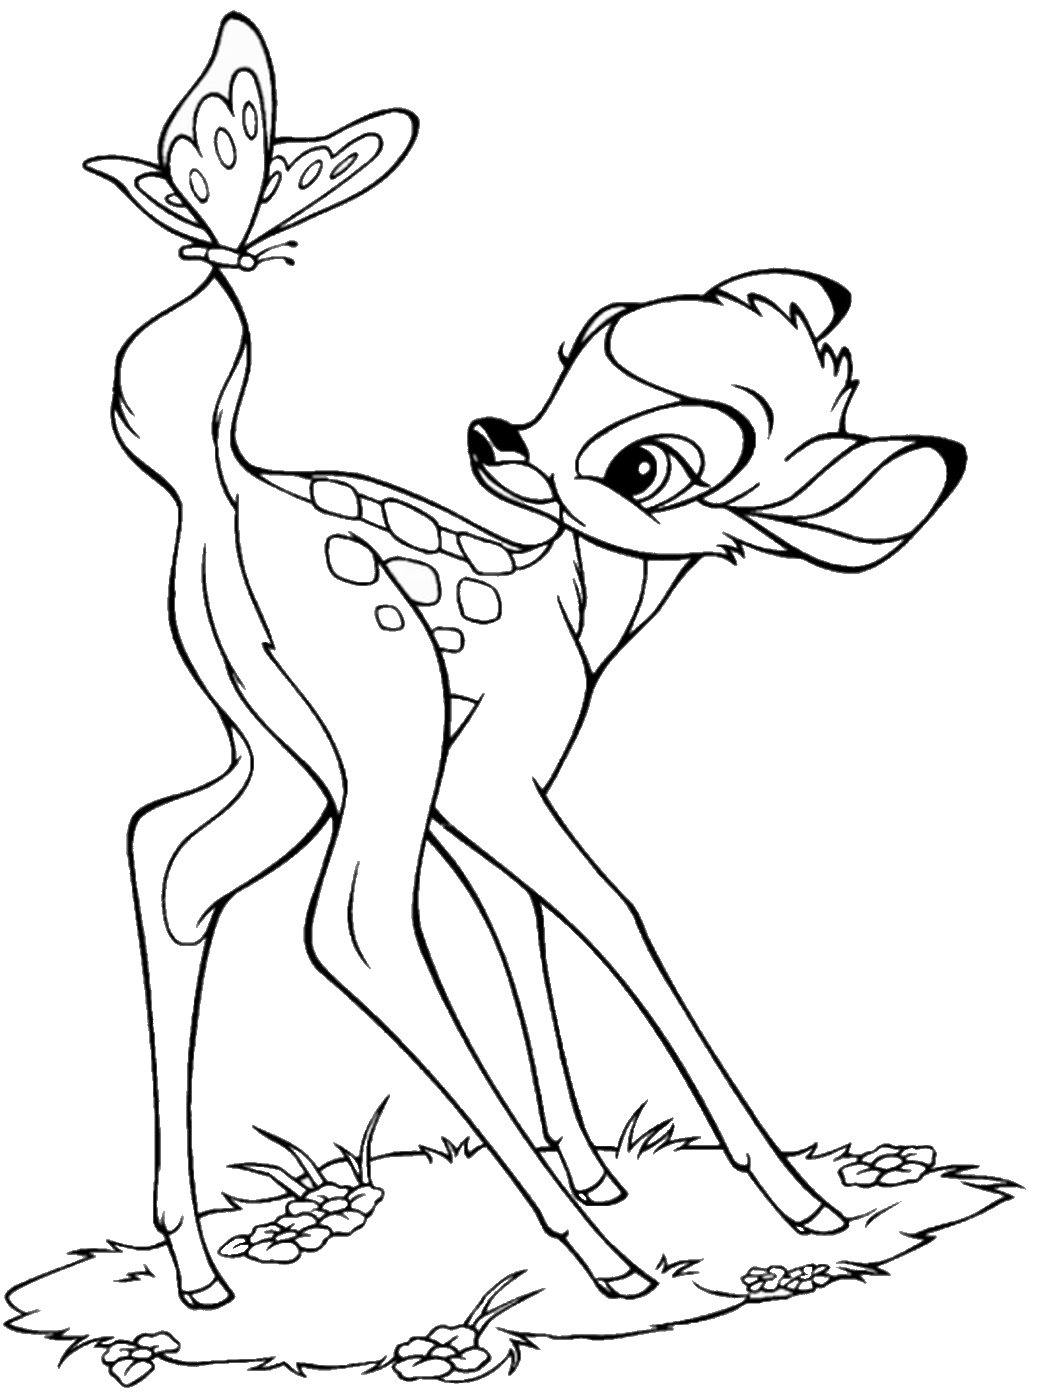 Bambi Coloring Pages Cartoons bambic1 Printable 2020 0981 Coloring4free